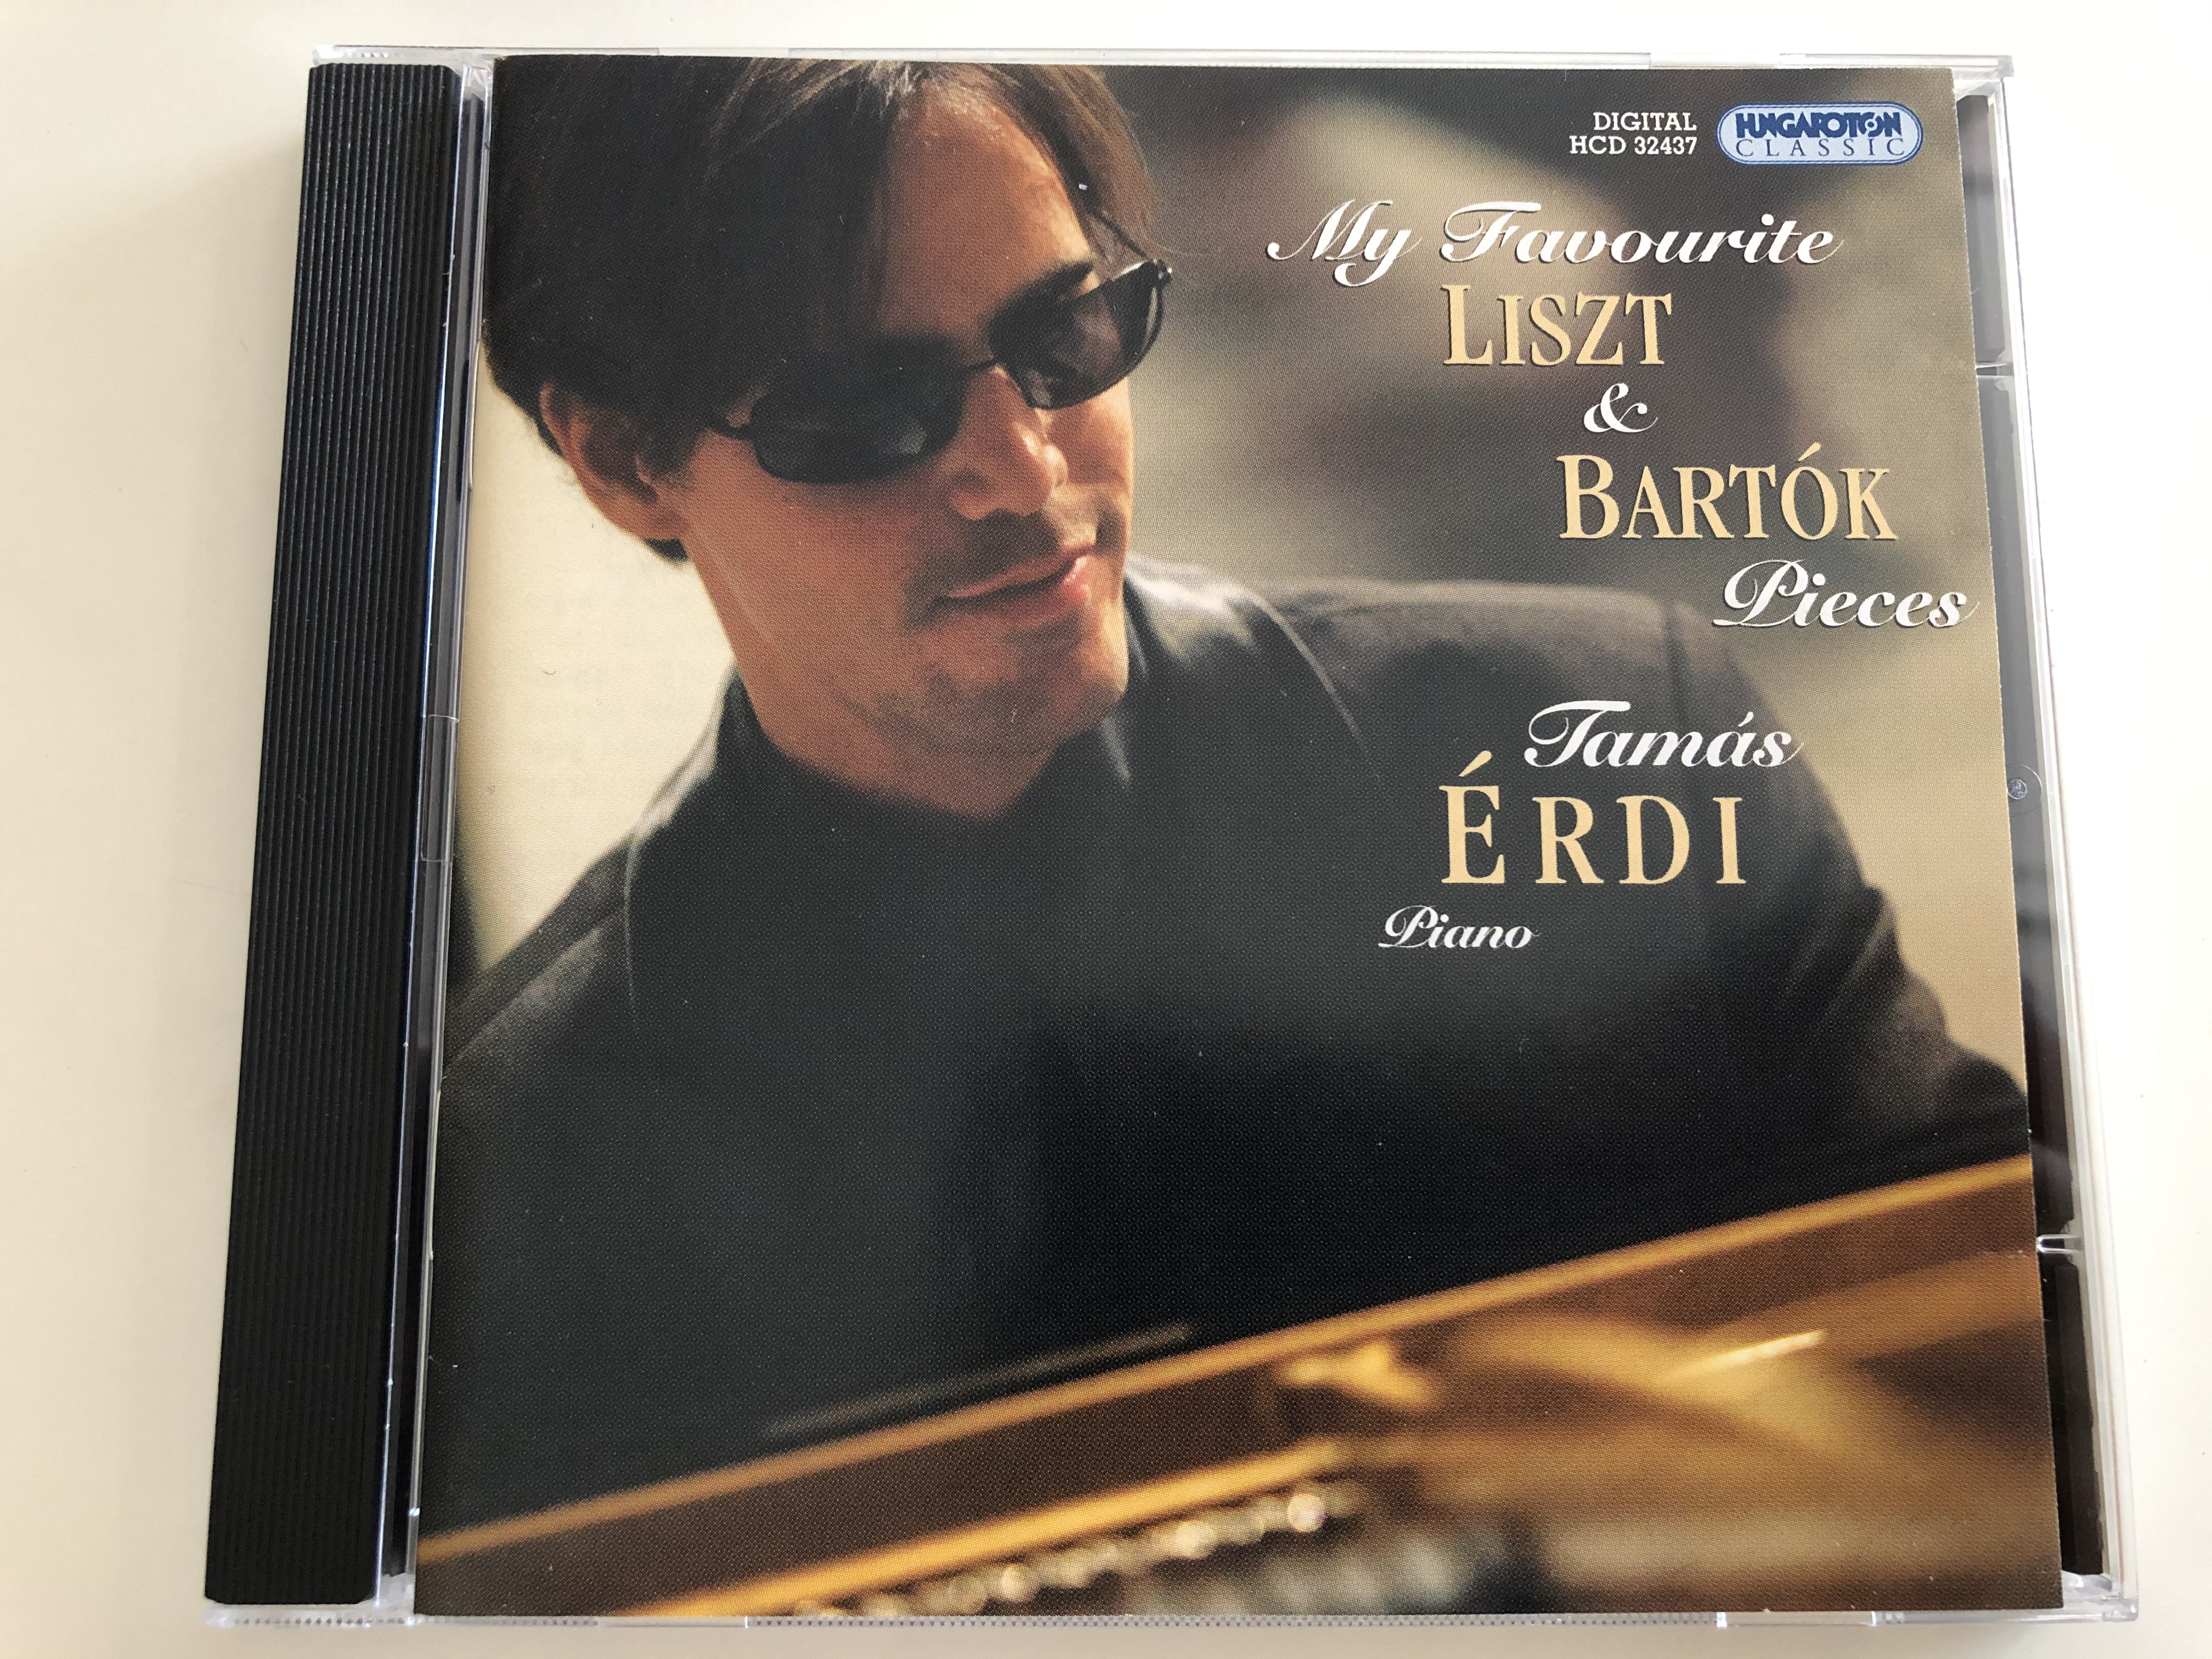 my-favourite-liszt-bartok-pieces-tamas-erdi-piano-hungaroton-classic-audio-cd-2006-stereo-hcd-32437-1-.jpg